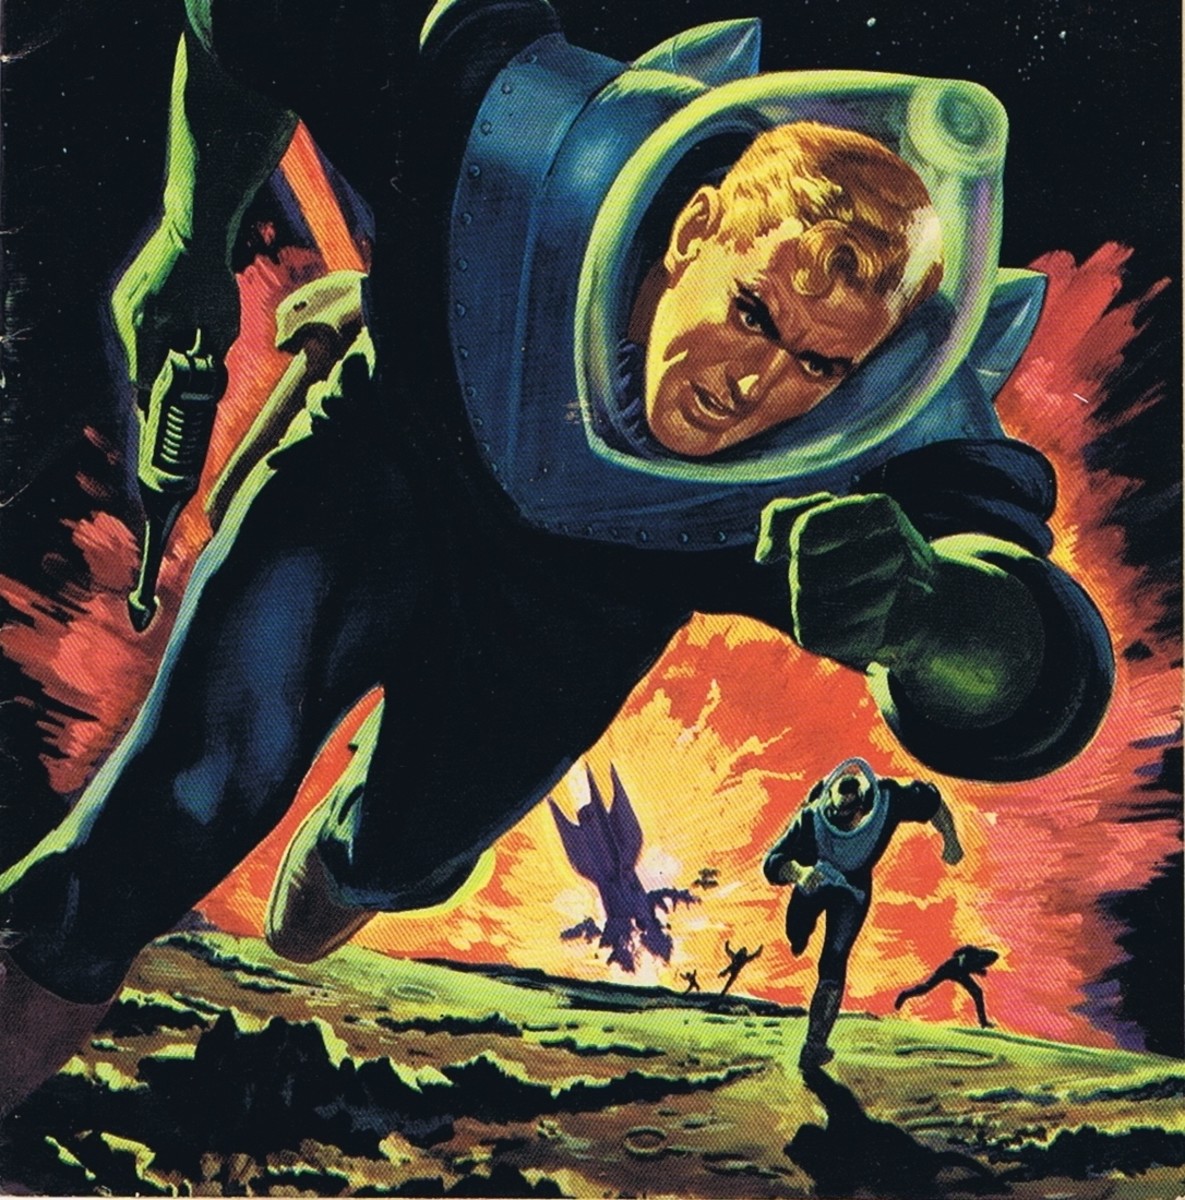 The Beautiful, Weird & Avant-Garde Art of Vintage Sci-Fi Books - Airows